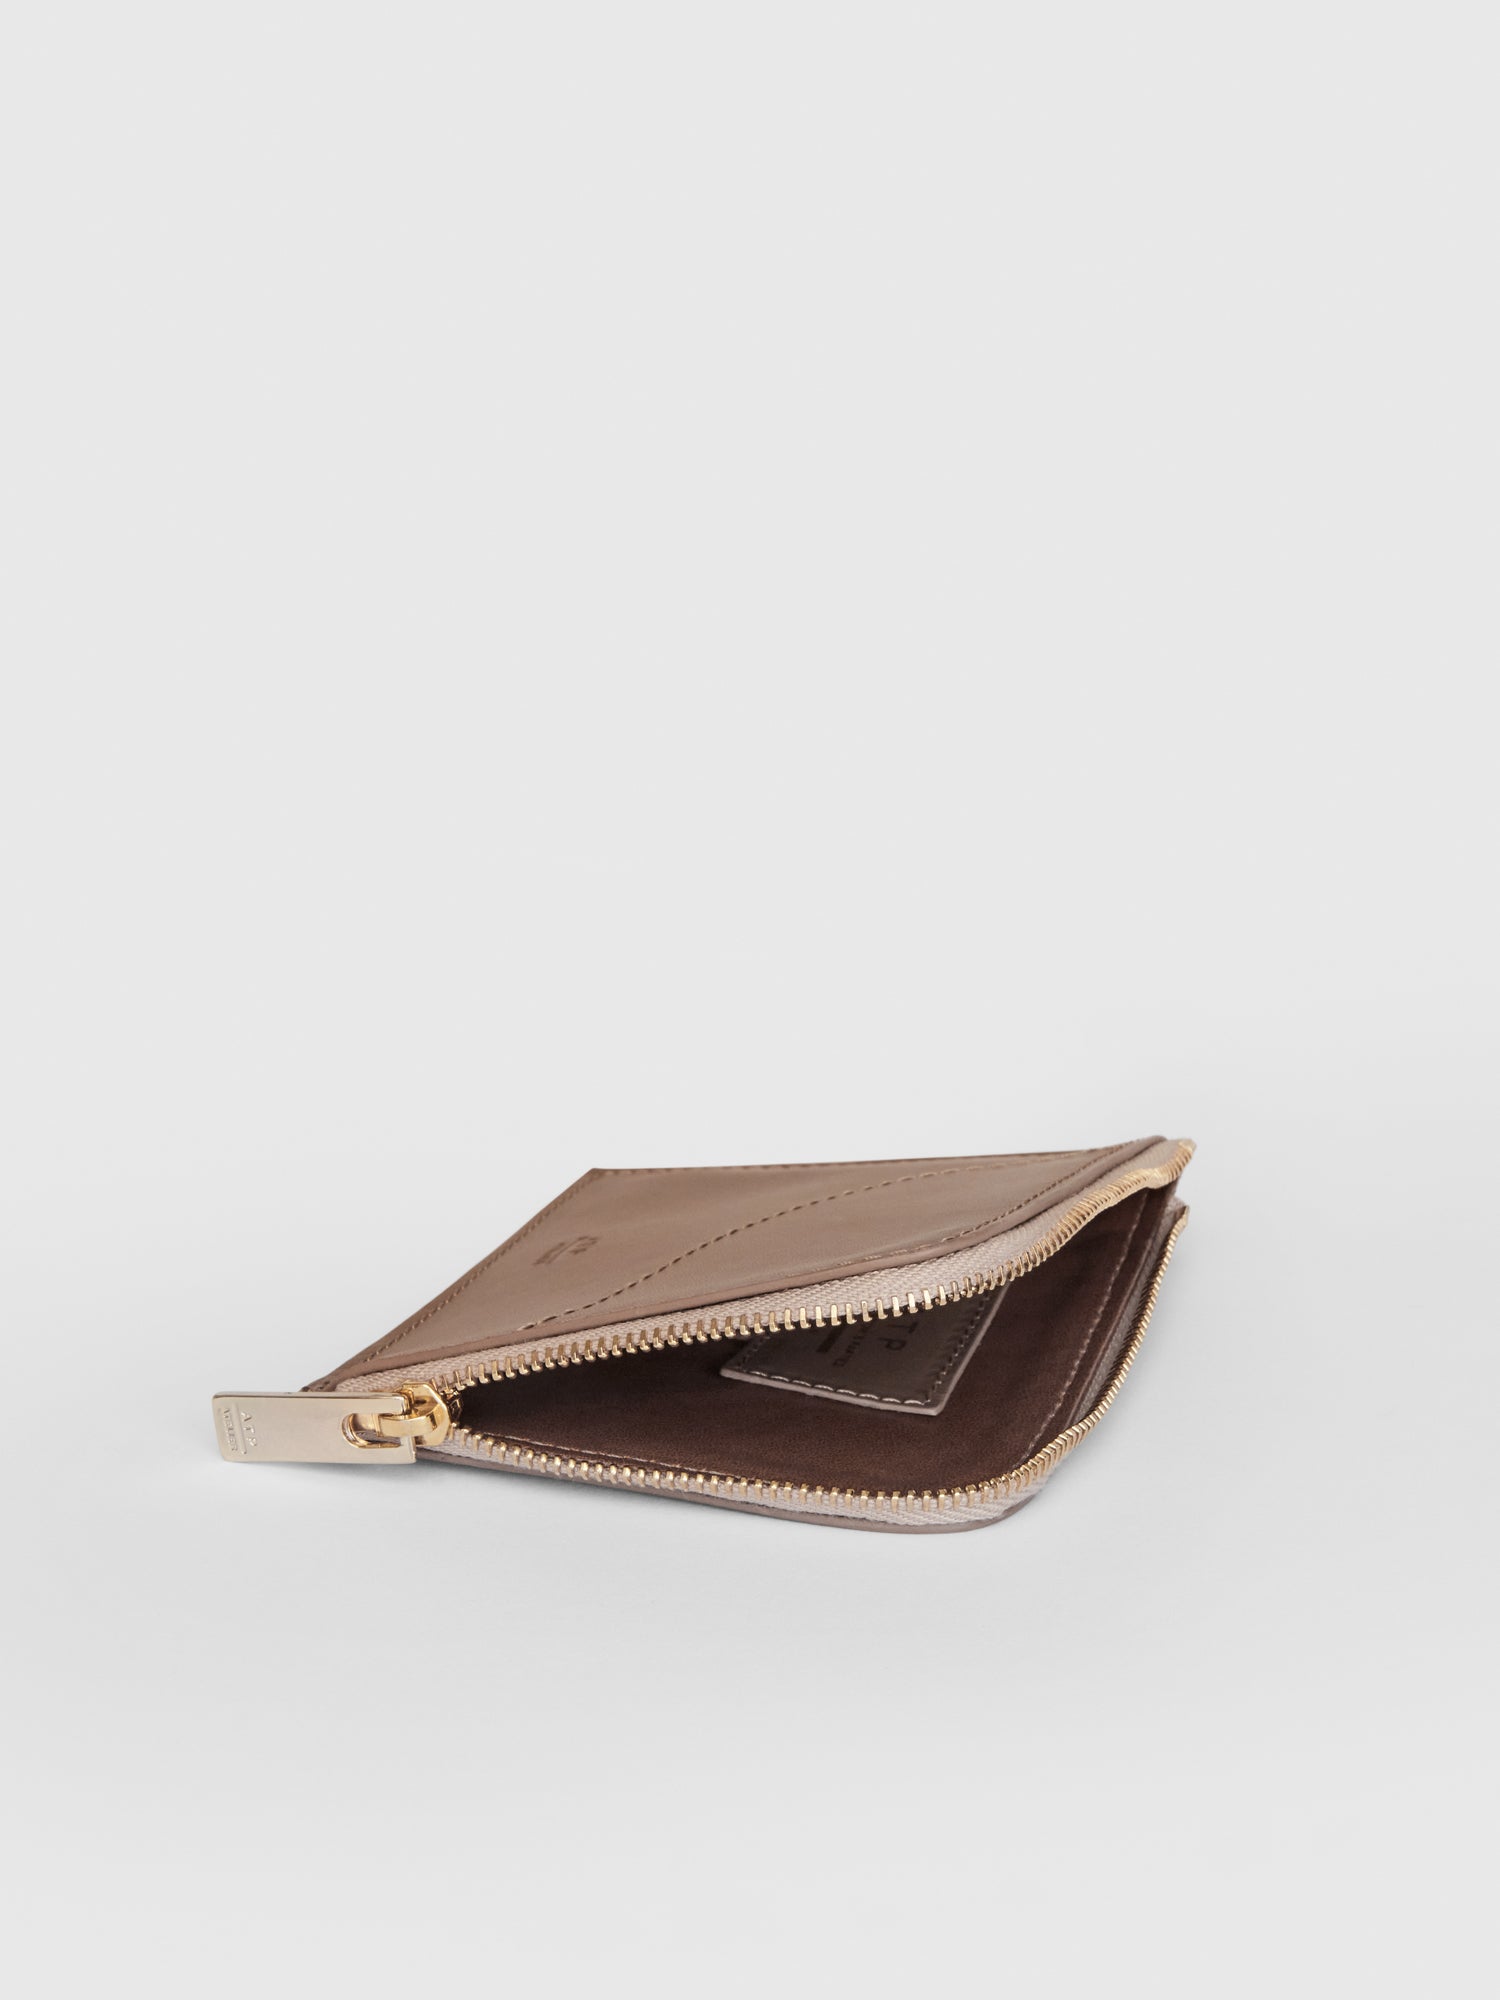 Vernio Hazelnut Leather Wallet